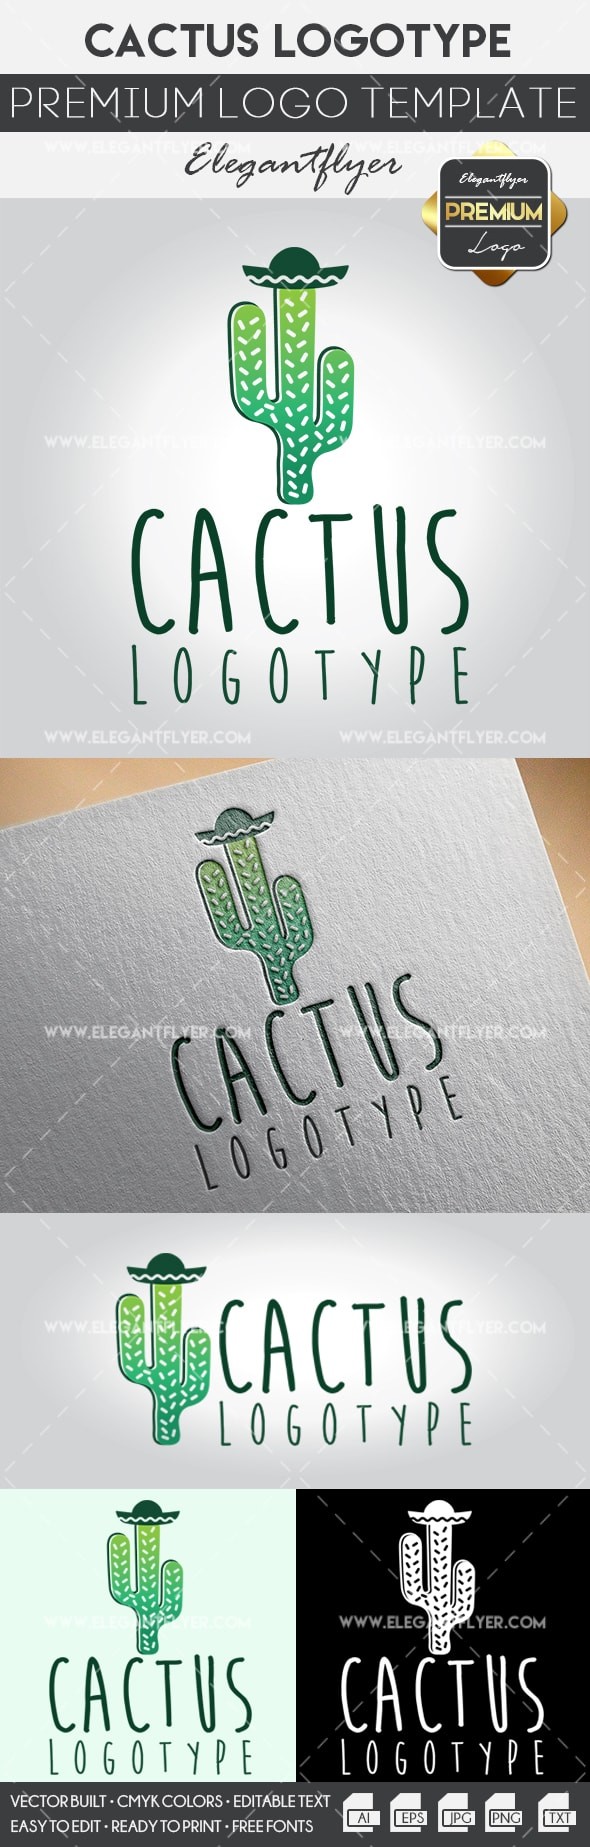 Cactus by ElegantFlyer